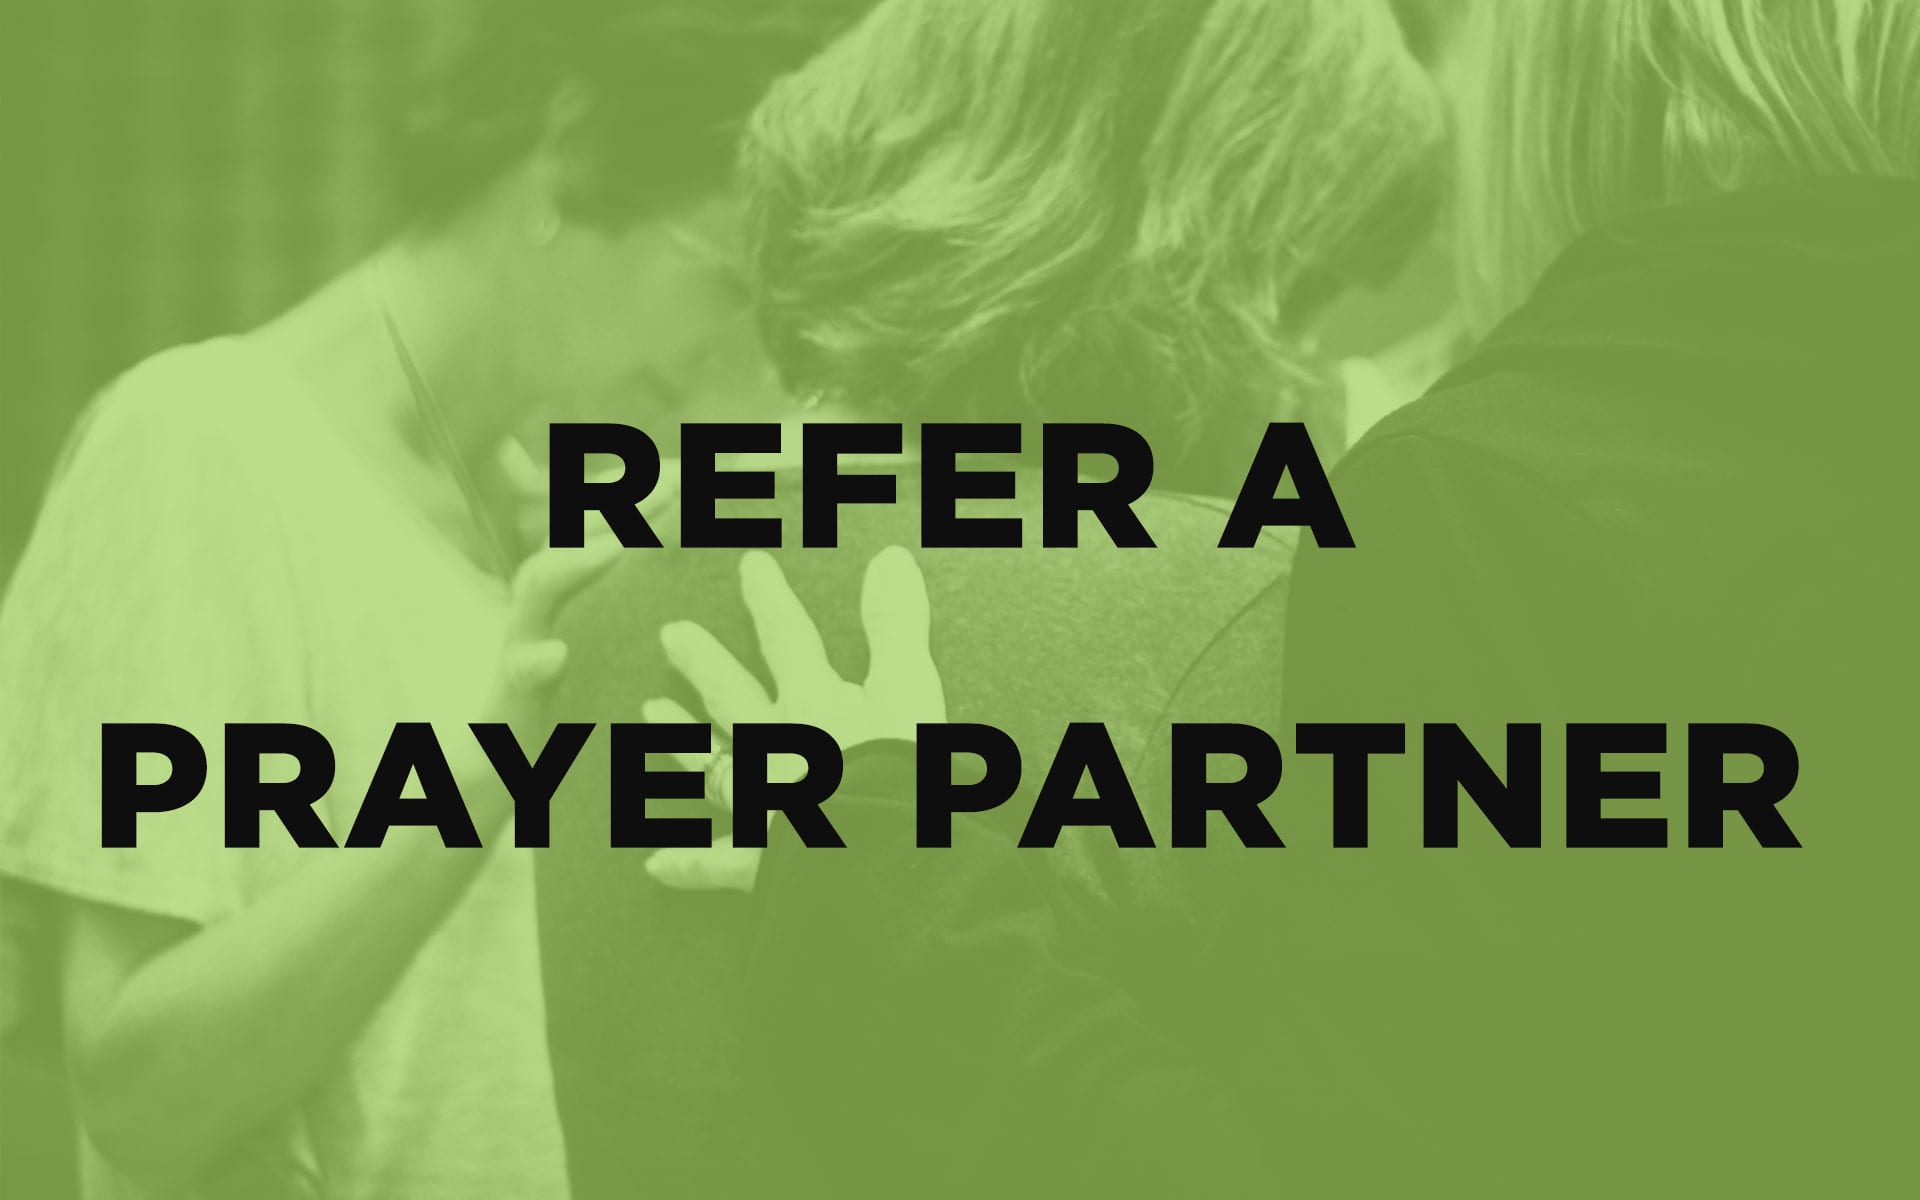 Refer a Prayer Partner